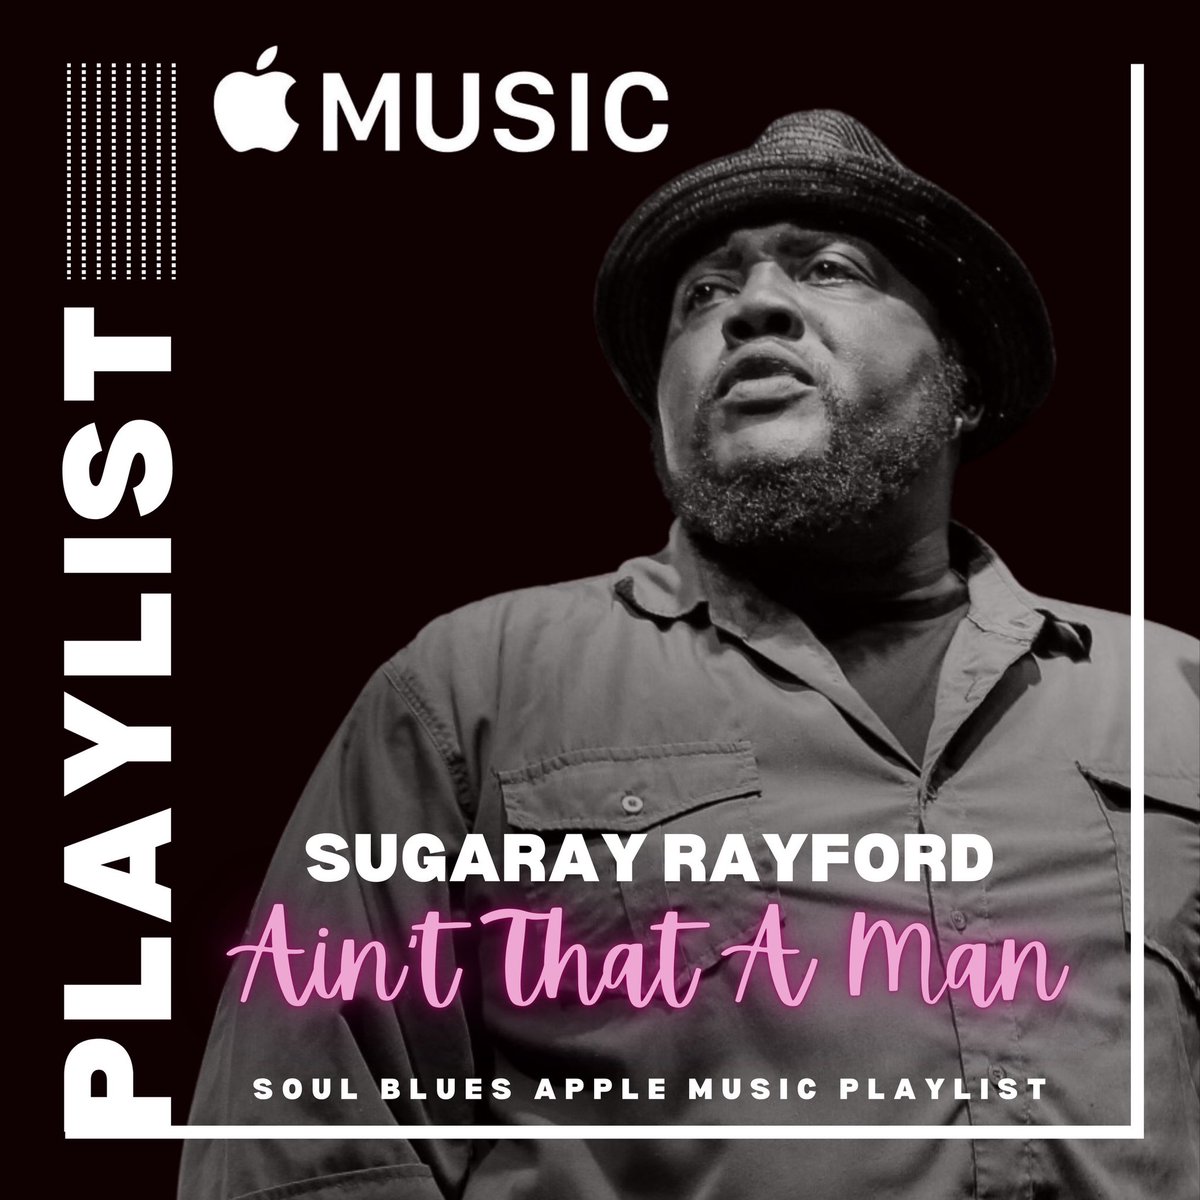 📱🎶 @SugarayRayford’s new single AIN’T THAT A MAN is #1 on Apple Music’s “Soul Blues” editorial playlist! Listen here…
🎧 music.apple.com/gb/playlist/so…
🙌🏼 Add sug to your playlist too! 😎 

#SugarayRayford #FortyBelowRecords #AppleMusic #SoulBlues #ApplePlaylist